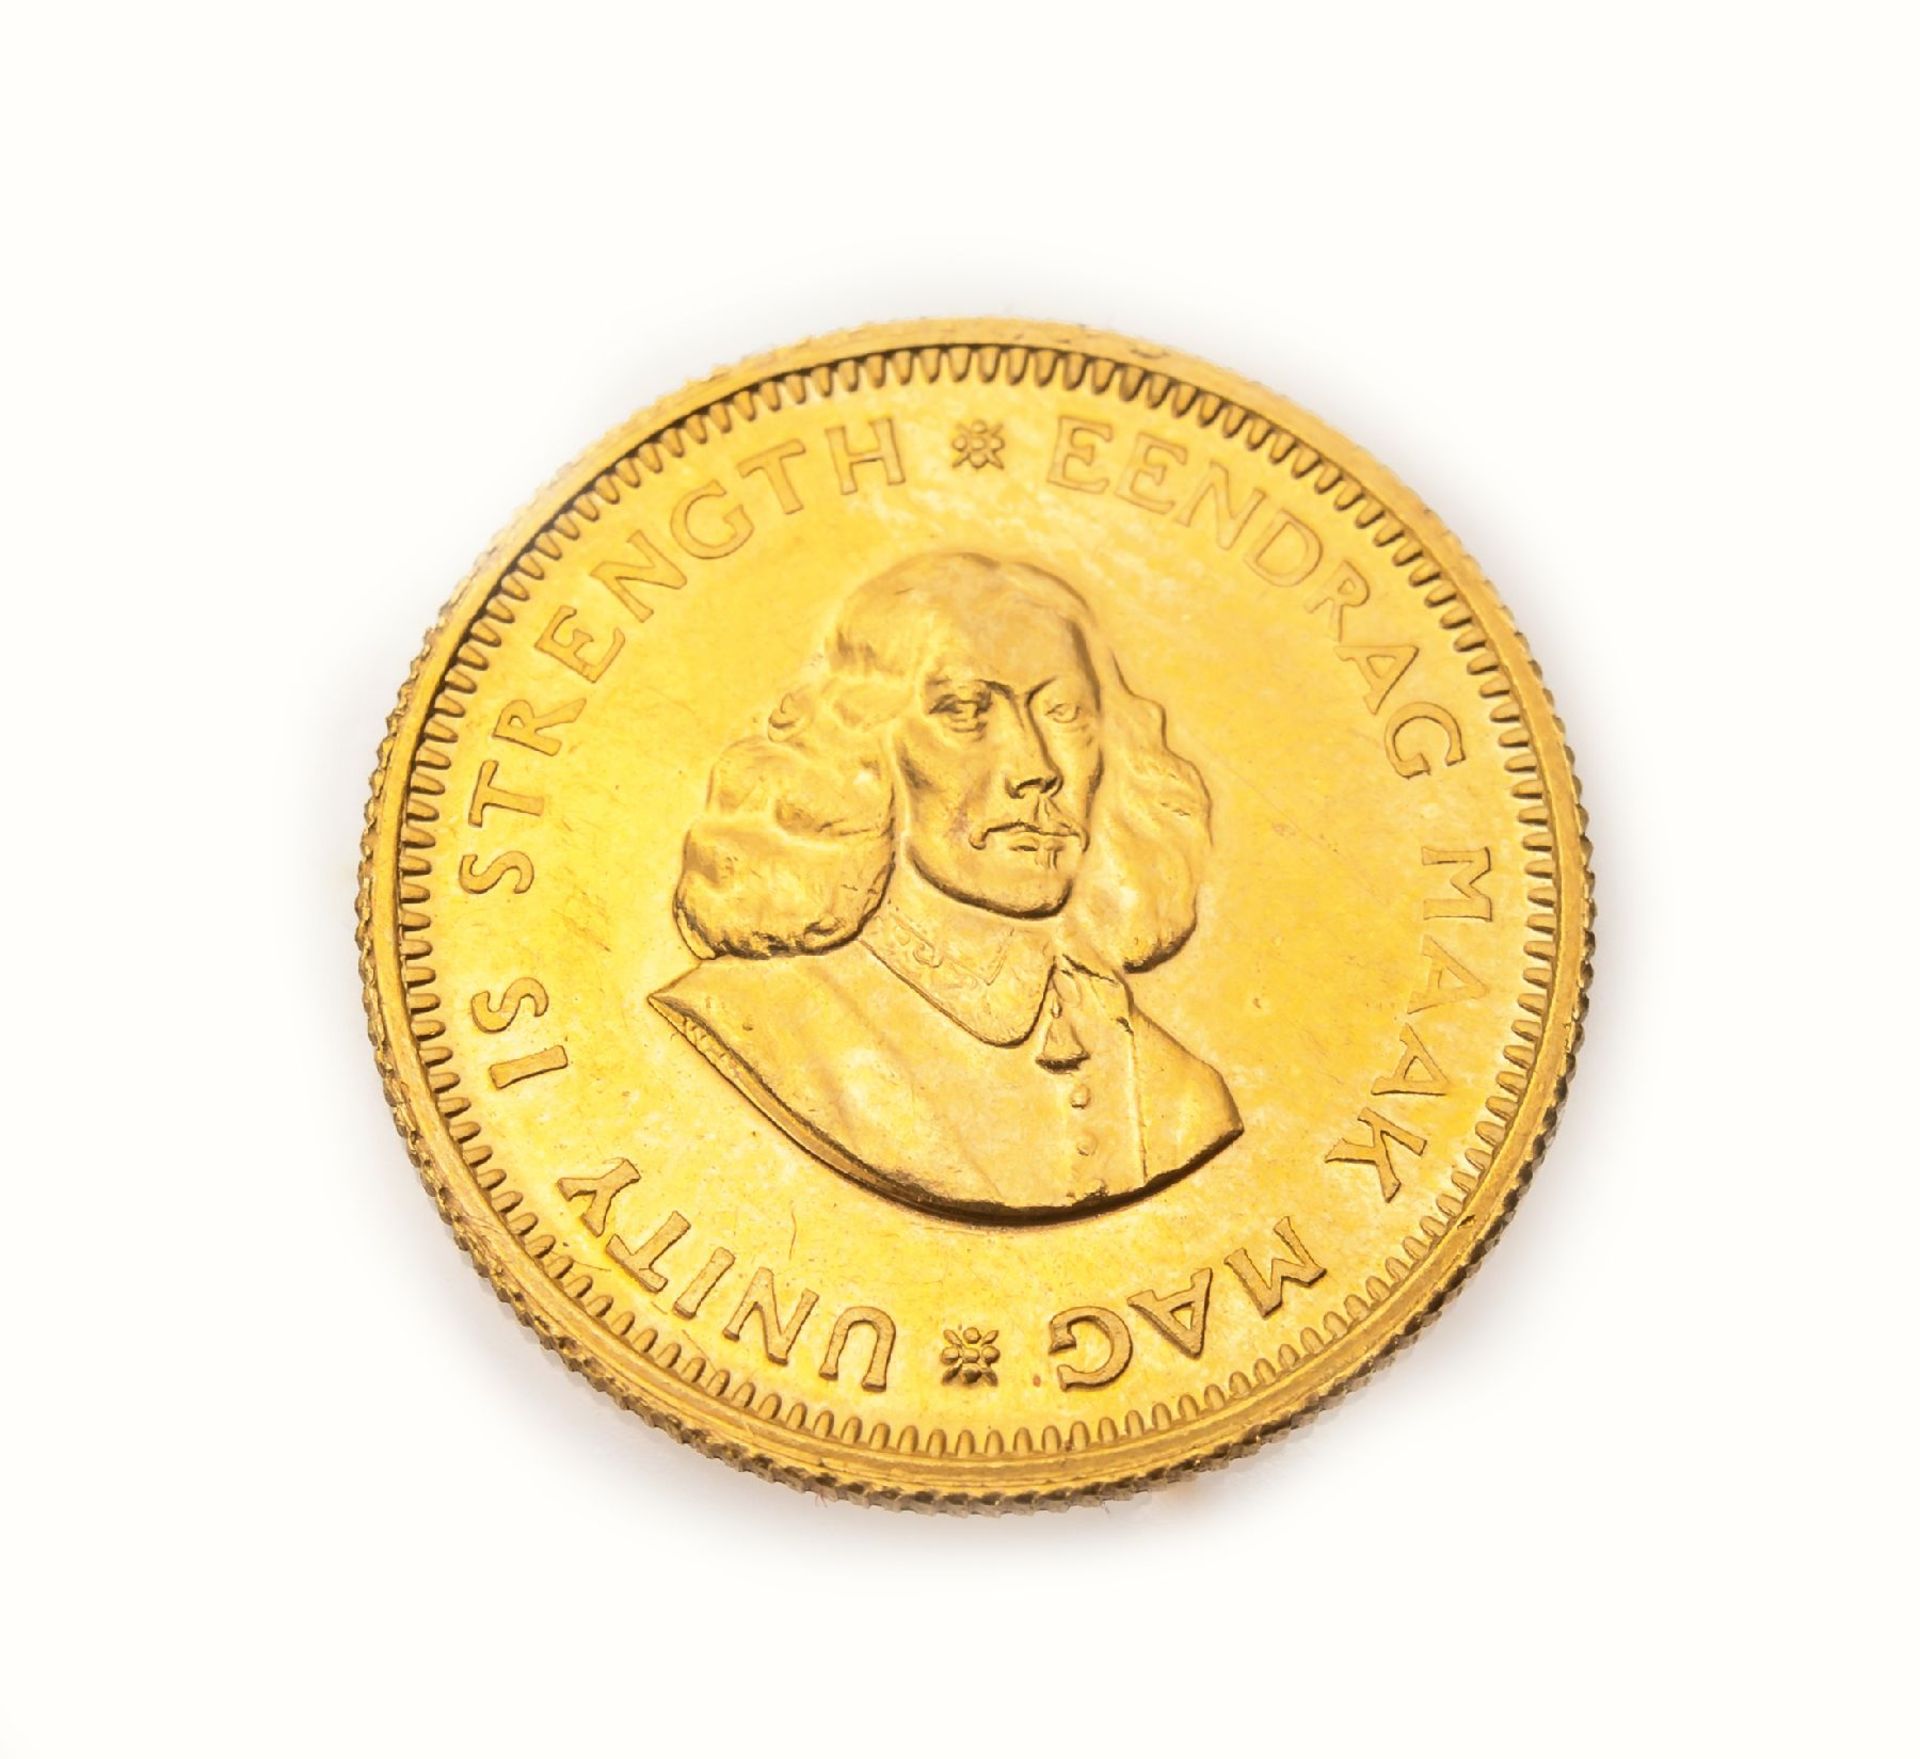 Goldmünze, 1 Rand, Südafrika, 1967, Springbock, Unity is